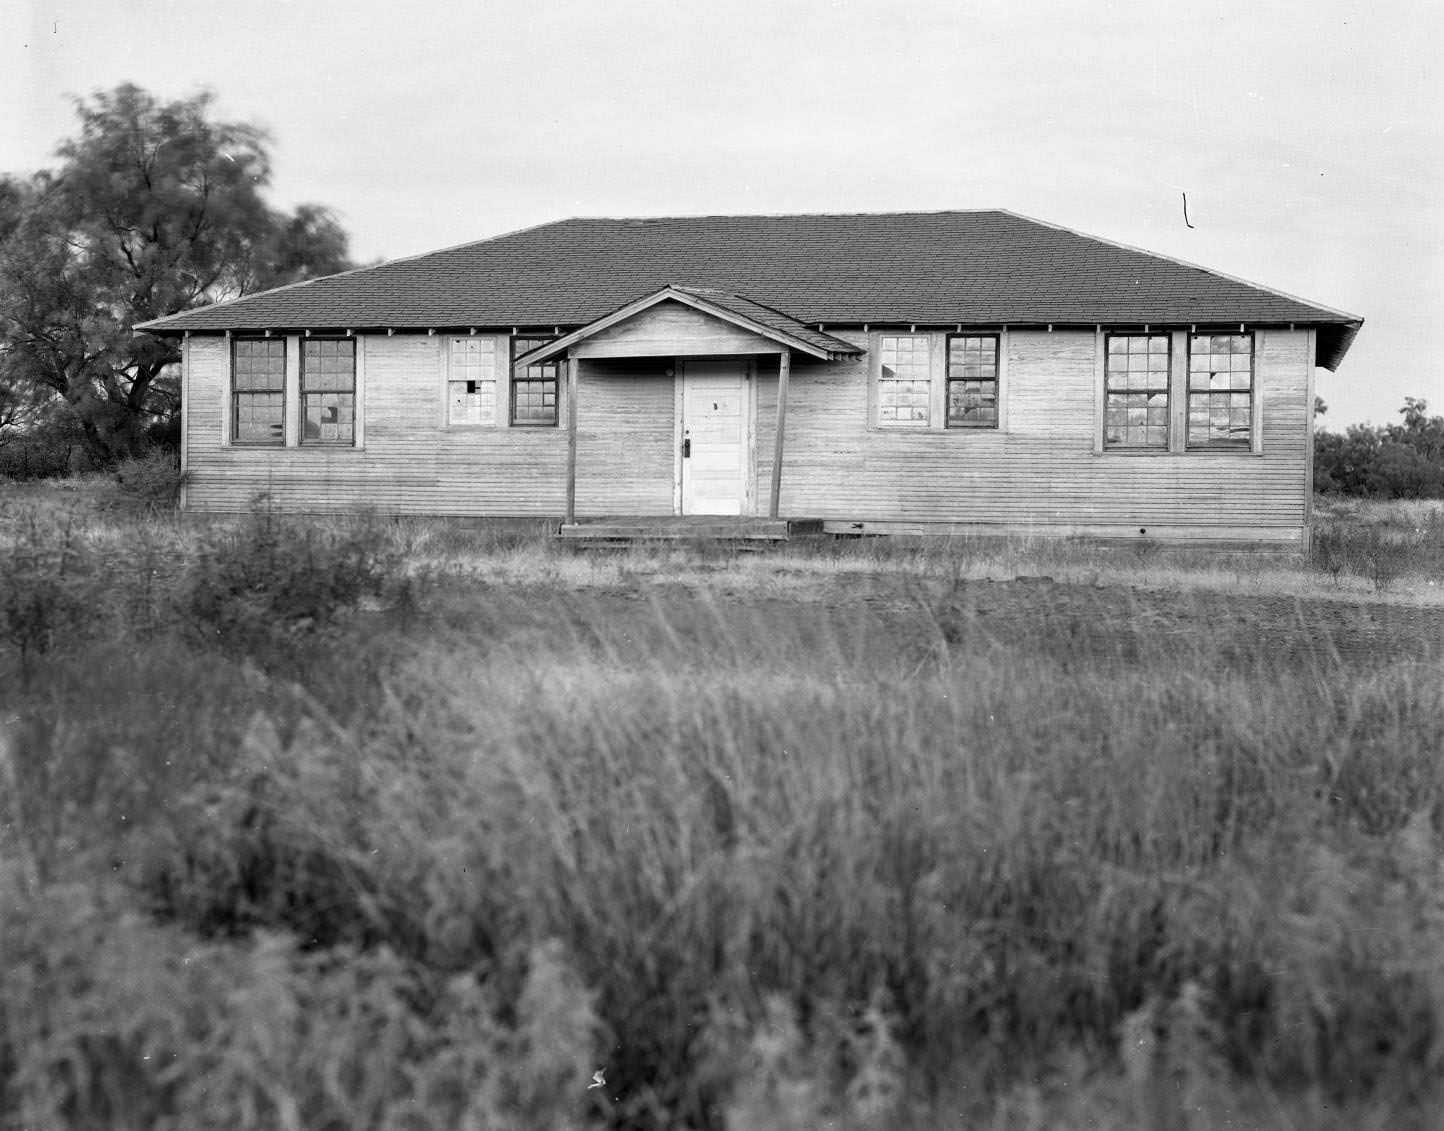 School House in Breckenridge, 1959